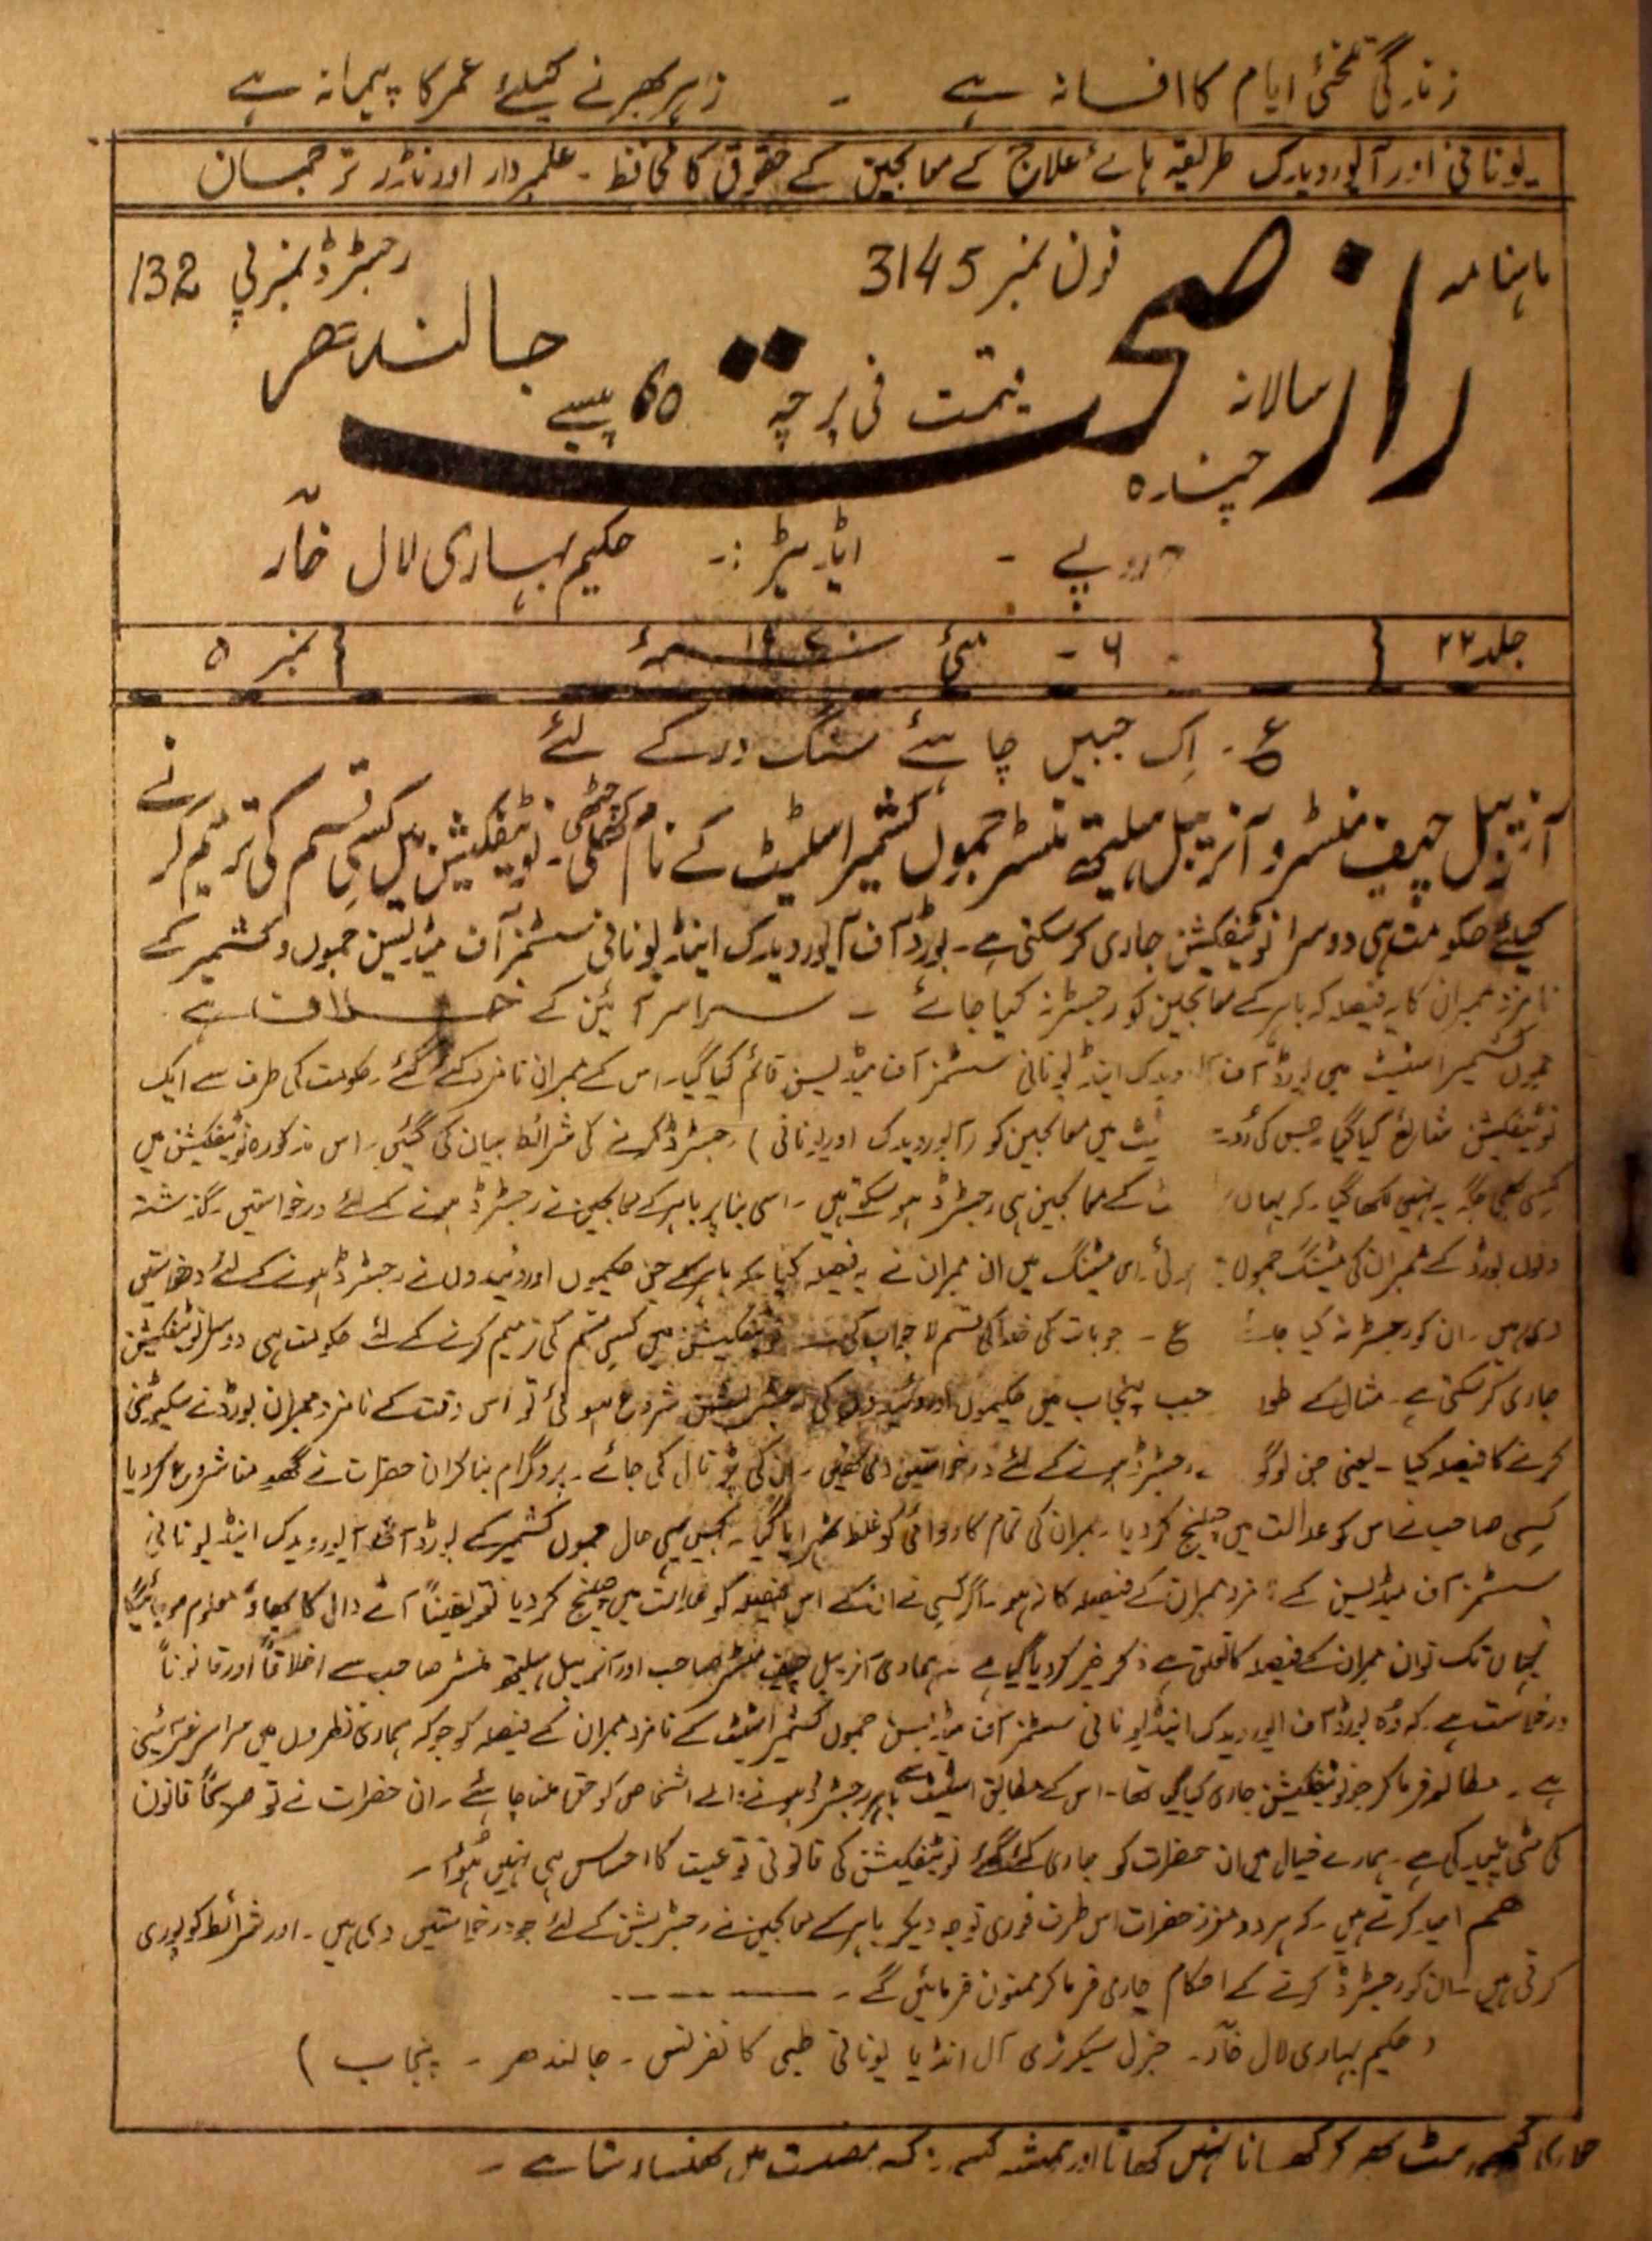 Raazi Sehat Jild 22 No 5  May 1970-Svk-Shumara Number-005